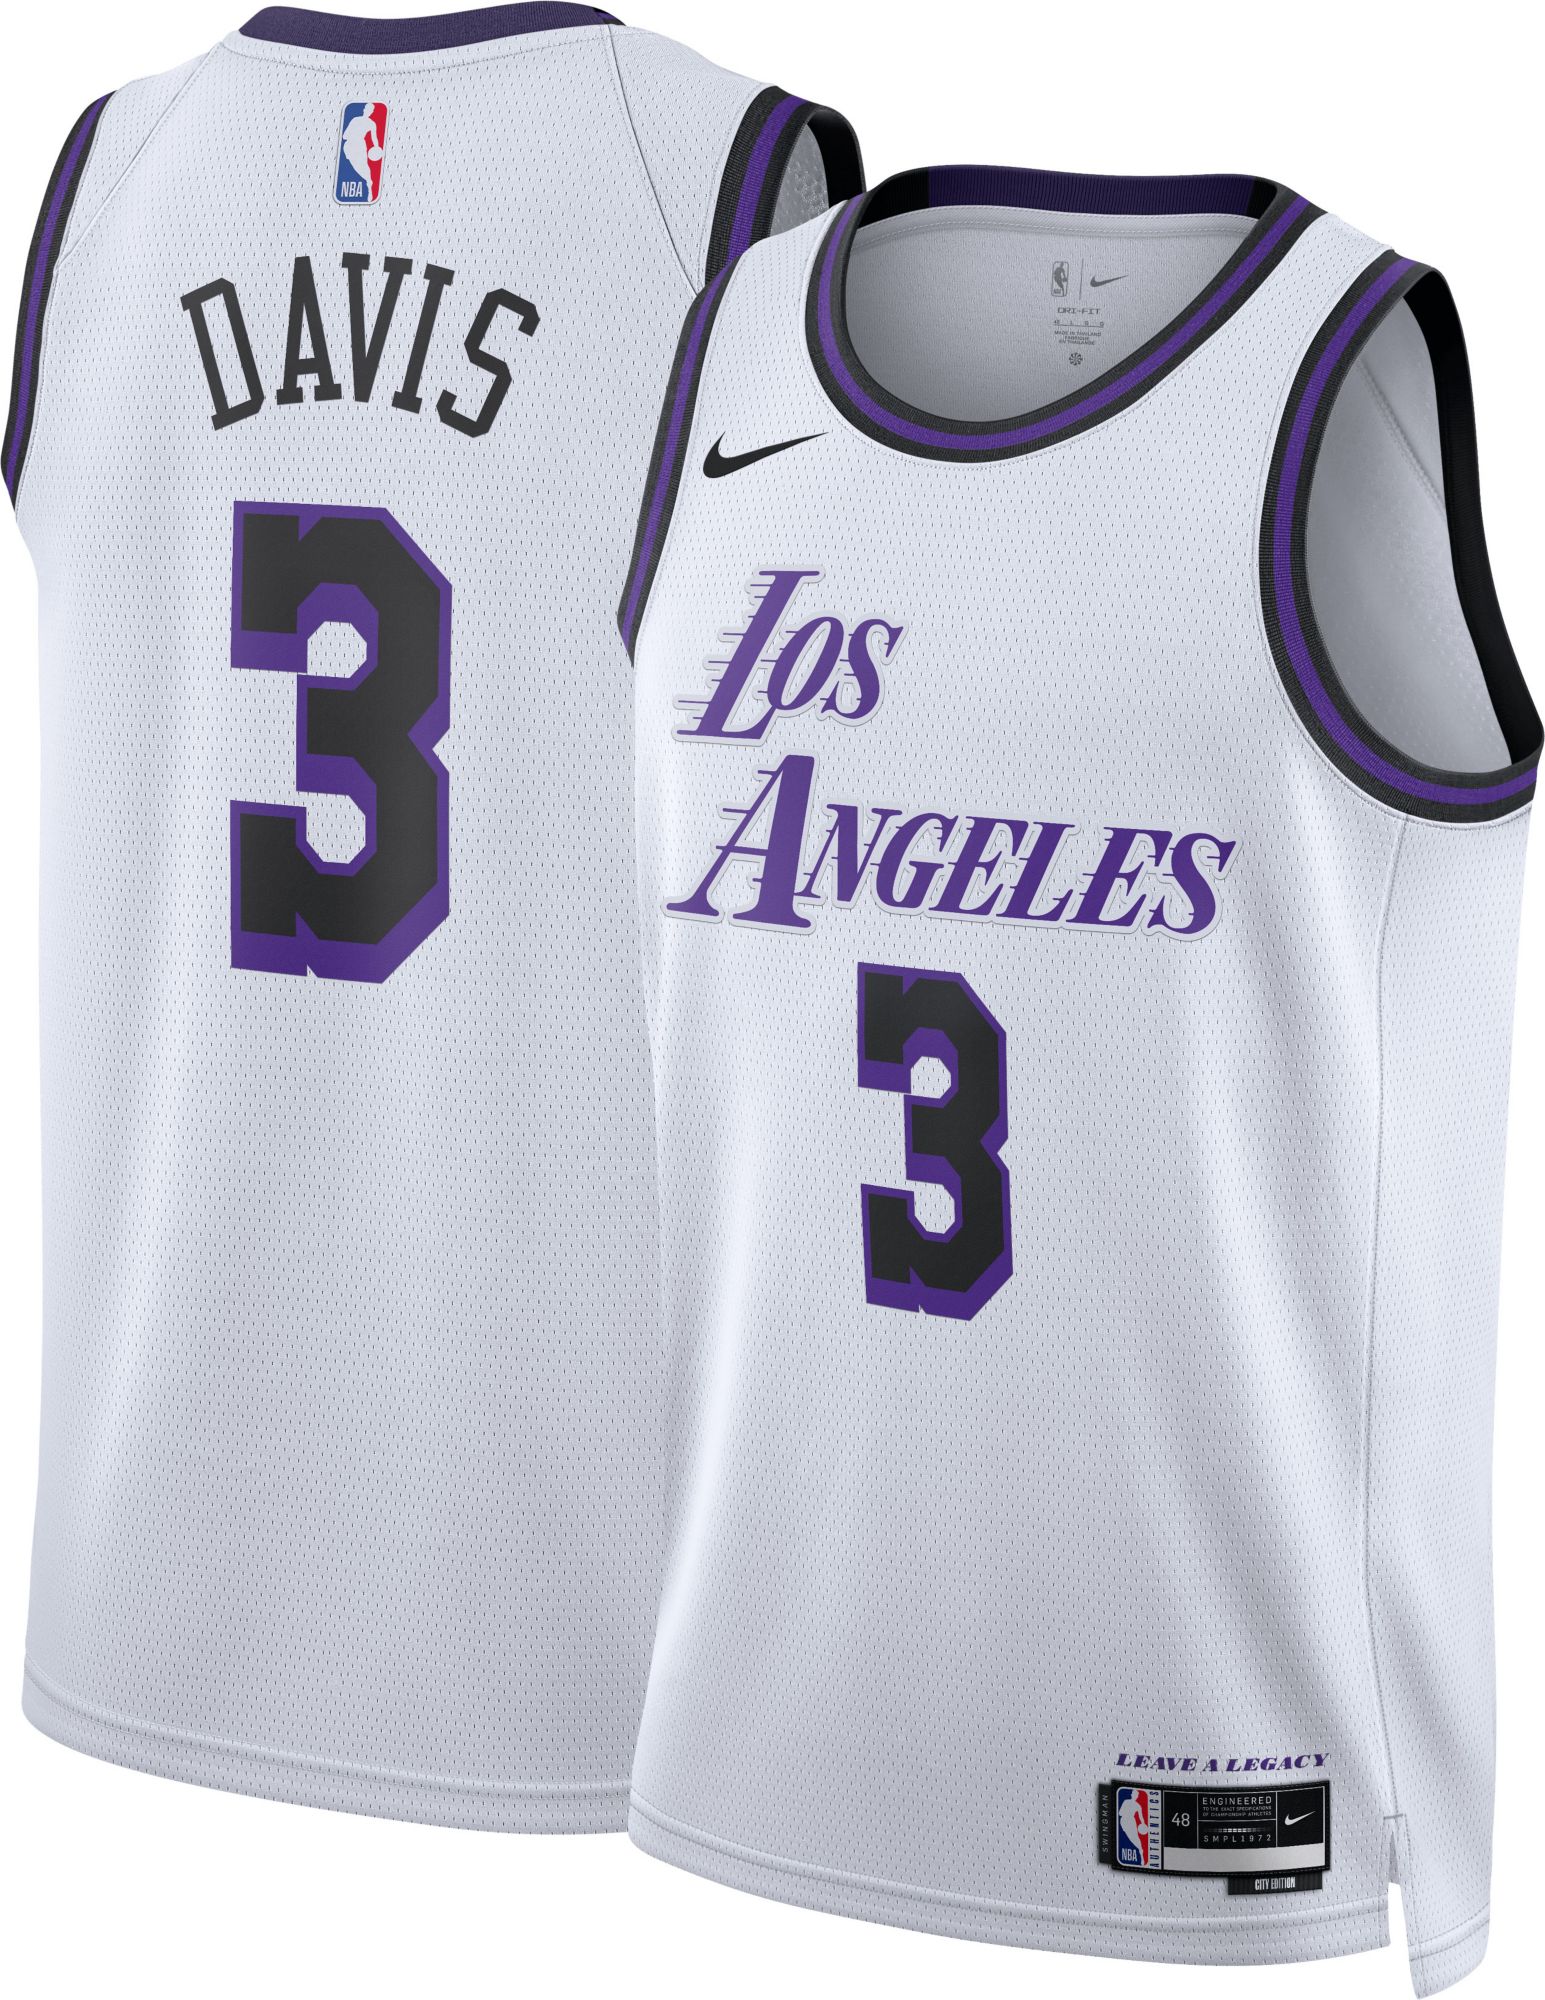 Nike Men's Los Angeles Lakers LeBron James #6 Yellow Dri-FIT Swingman Jersey